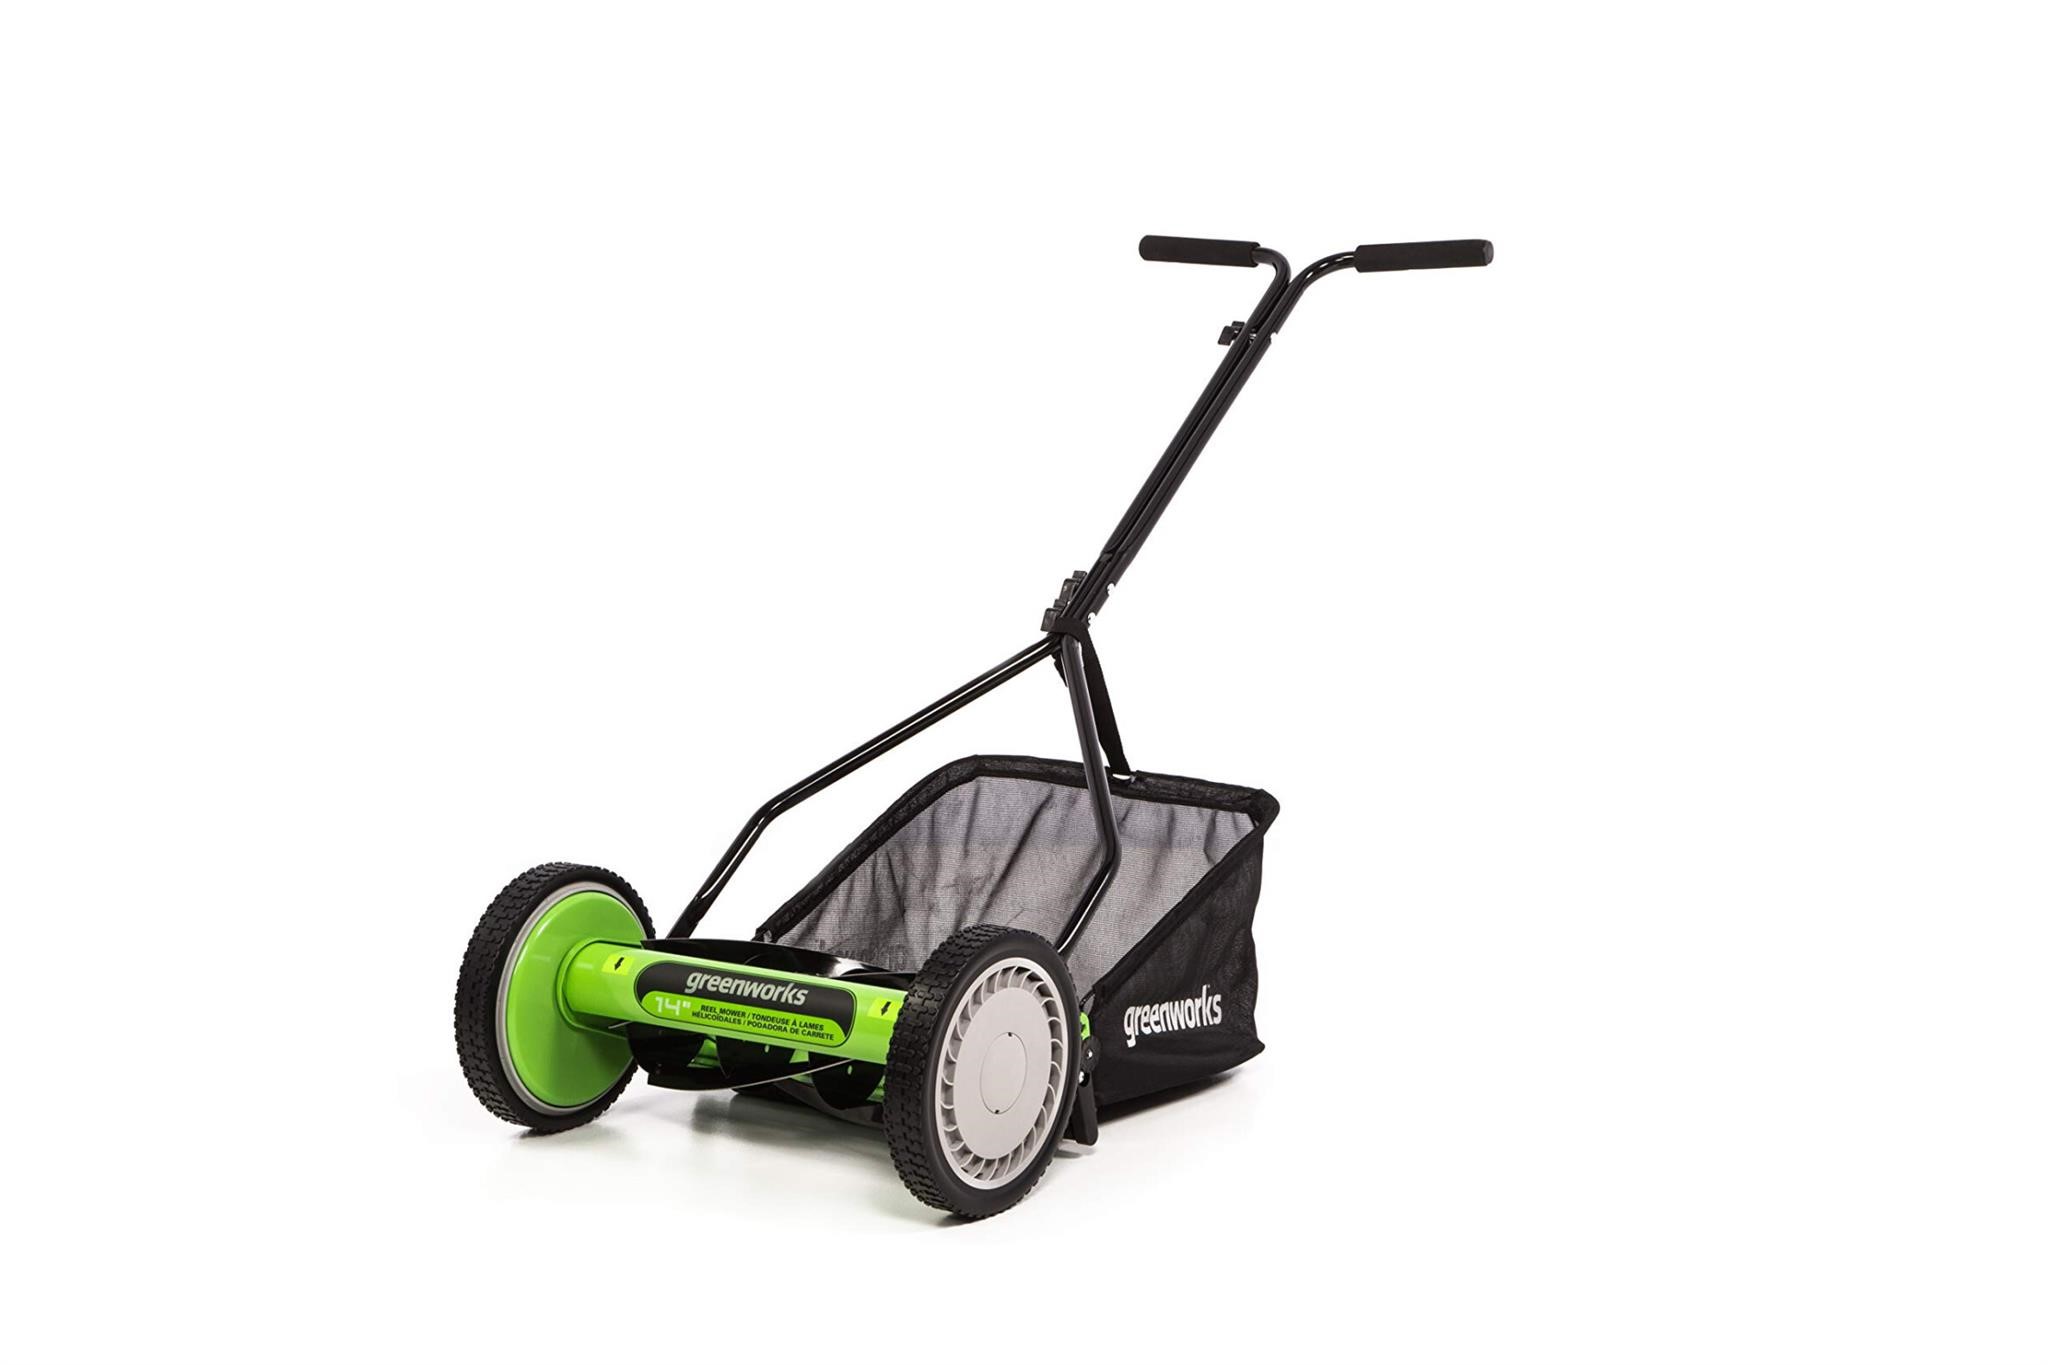 Greenworks 14-Inch Reel Lawn Mower RM1400